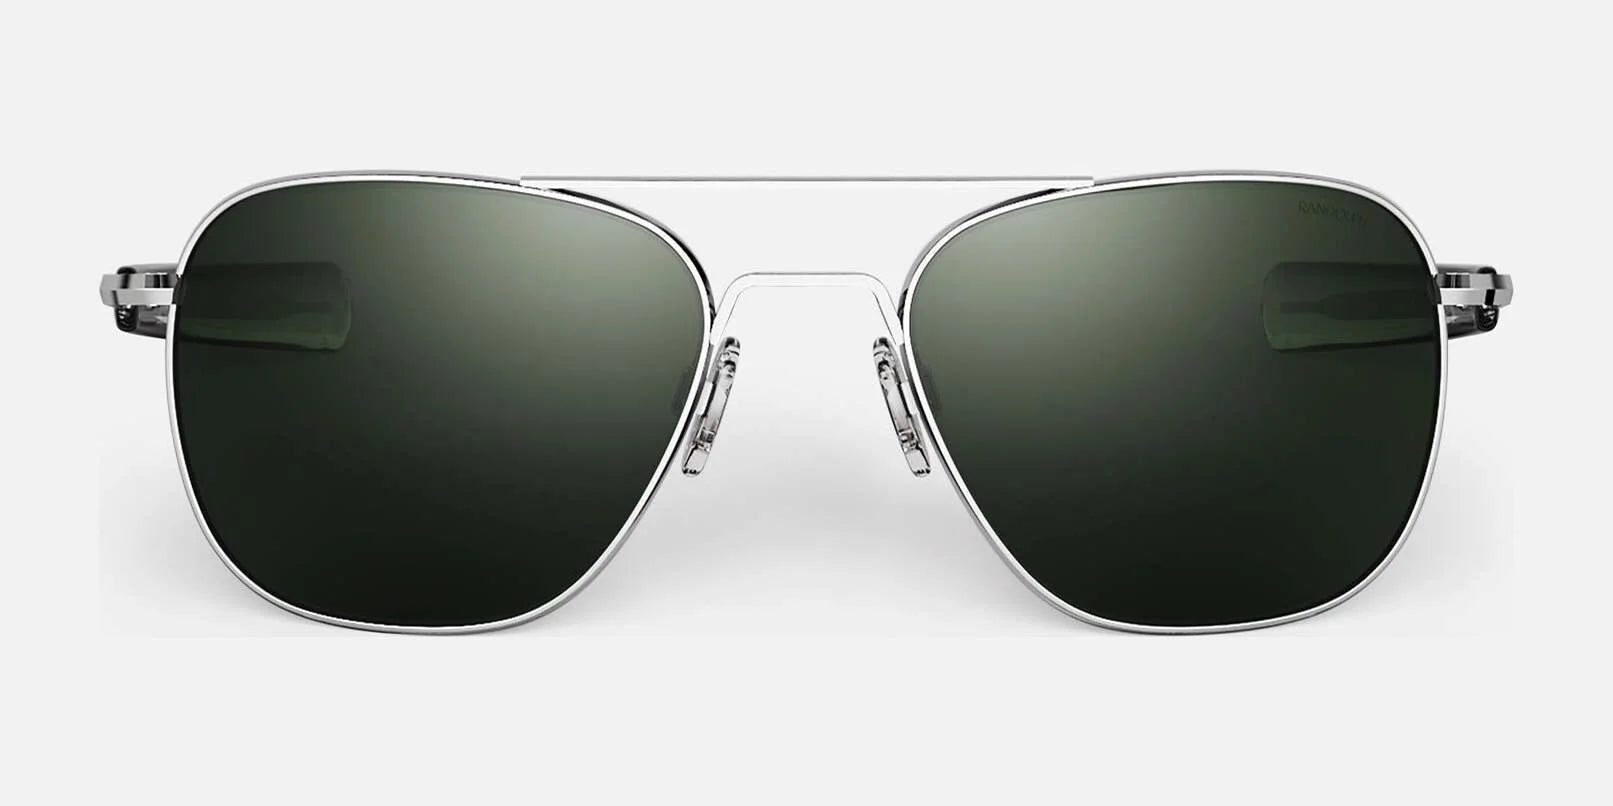 Randolph AVIATOR Sunglasses | Size 58 / Bright Chrome / AGX Non-Polar Glass